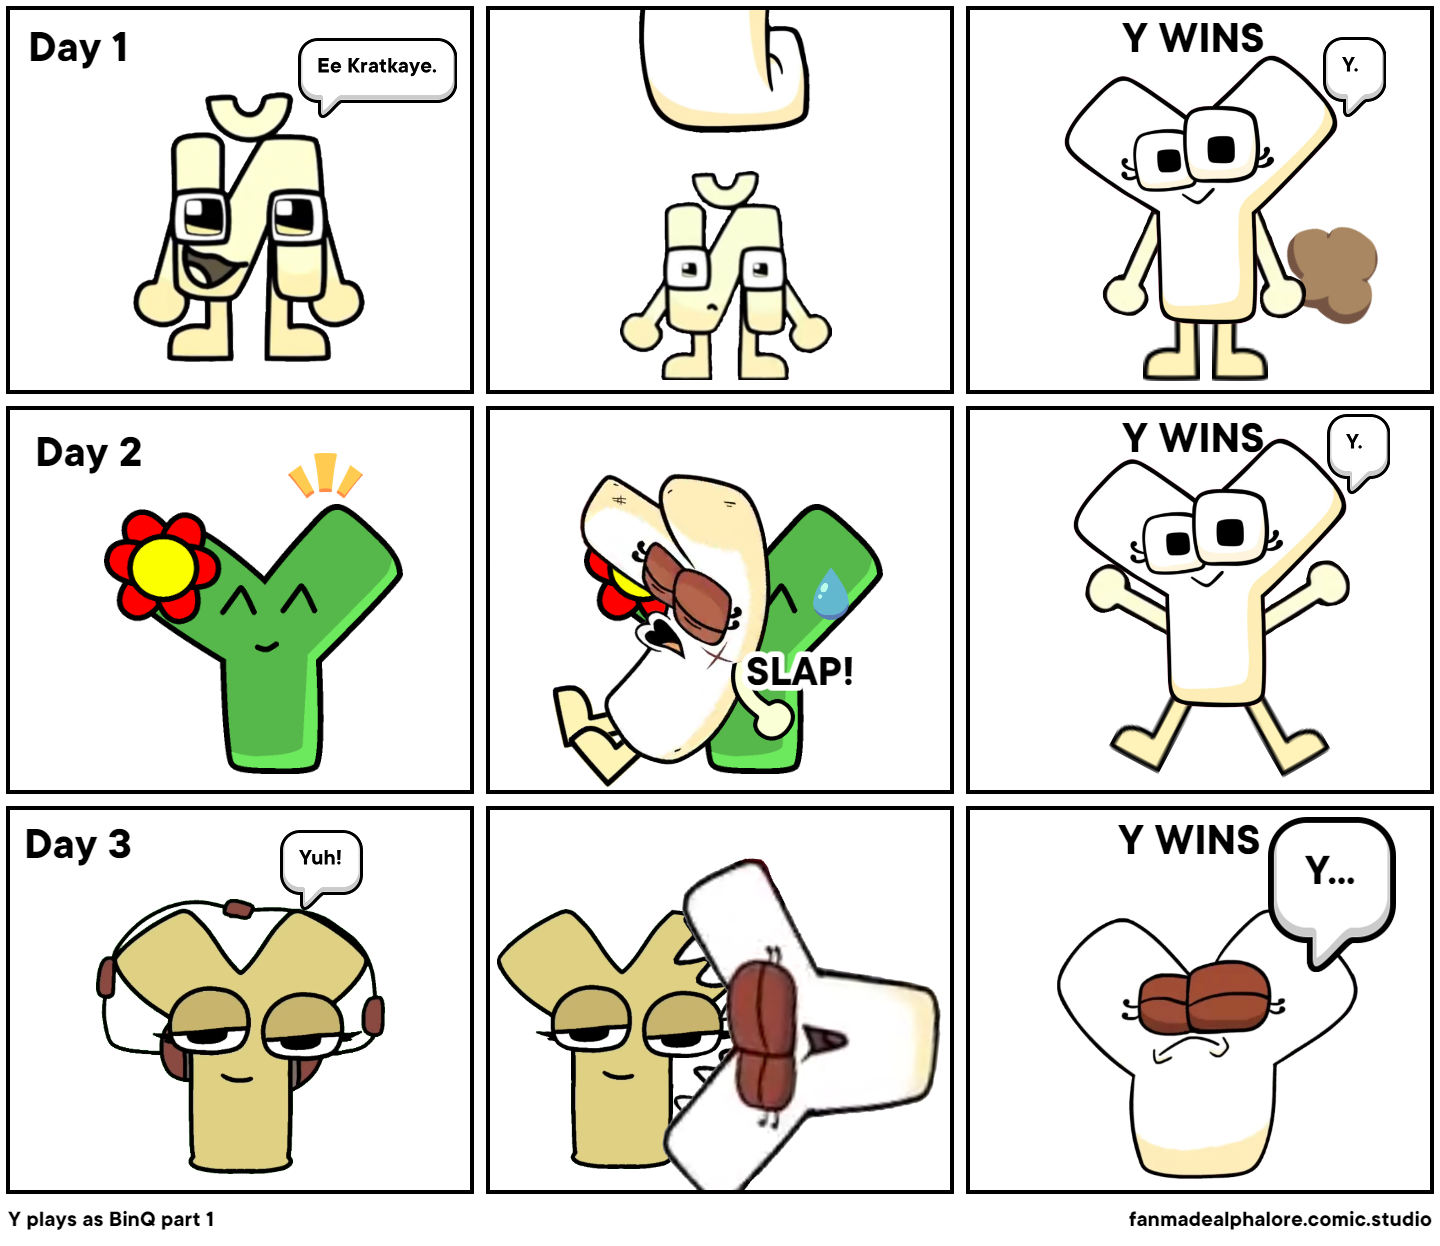 Angry alphabets (Comic by me) - Comic Studio